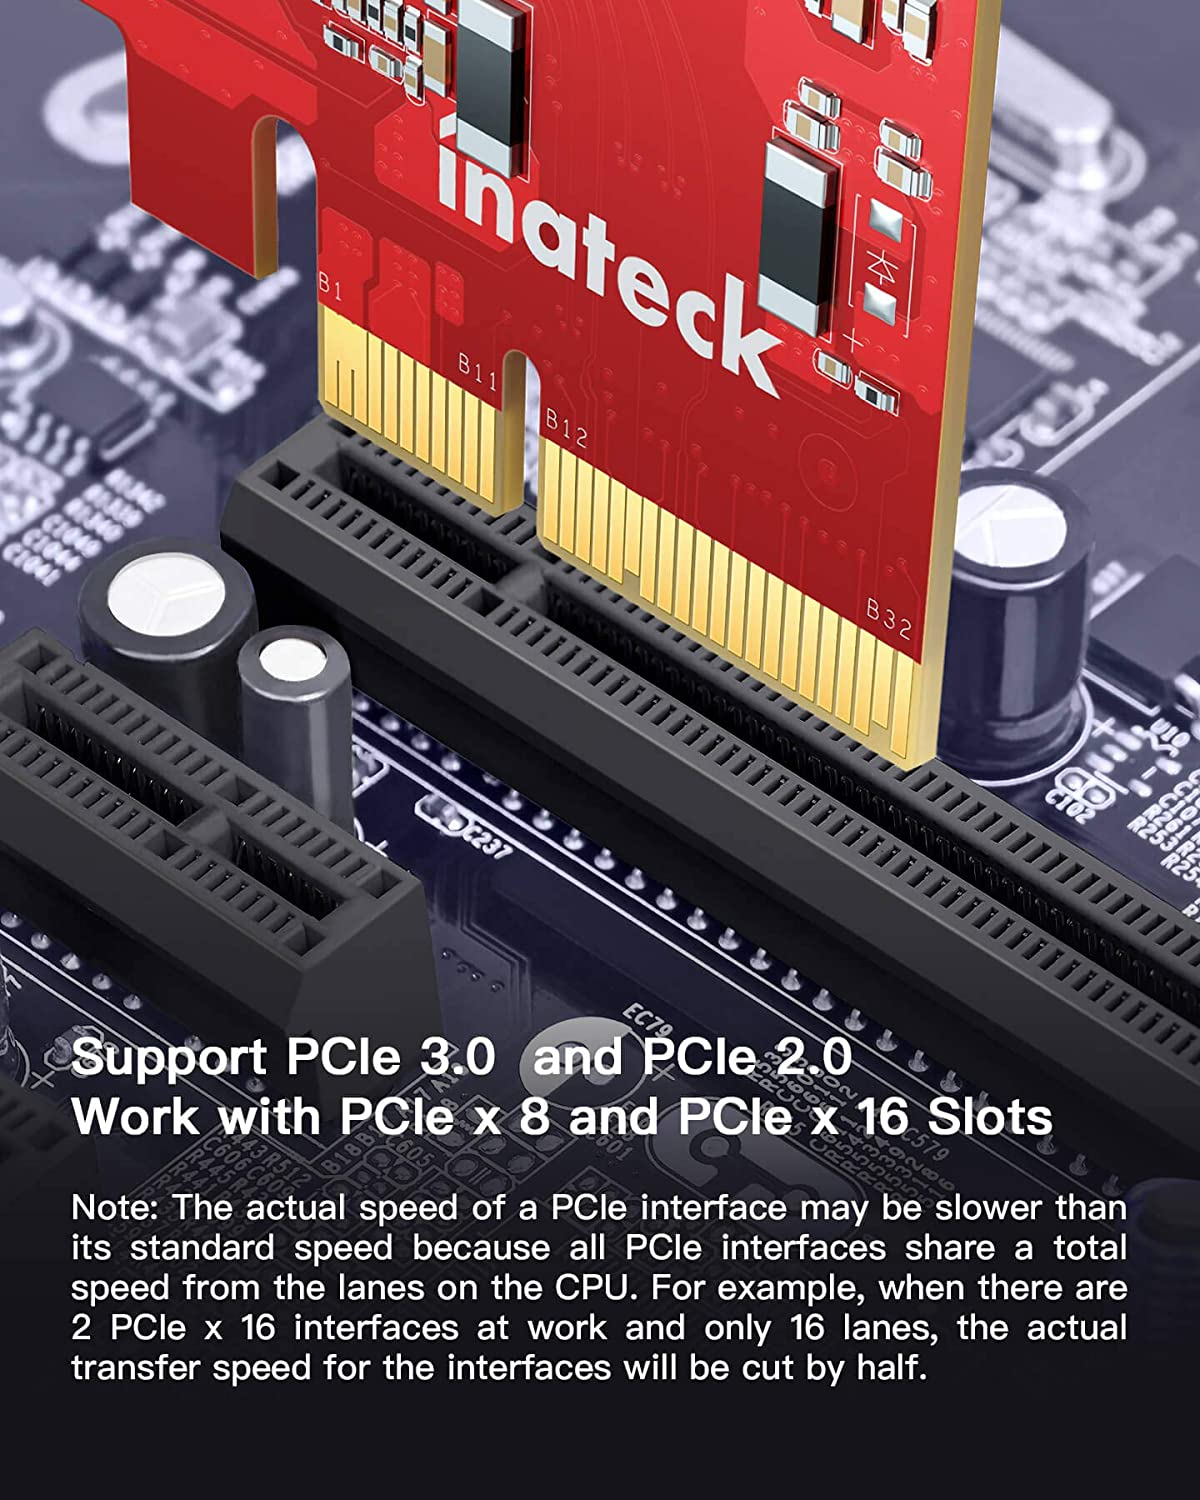 INATECK PCI RedComets USB Express-Karte 2 Express U21 20 3.2 zu mit Karte PCIe Gen Bandbreite Gbit/s karte